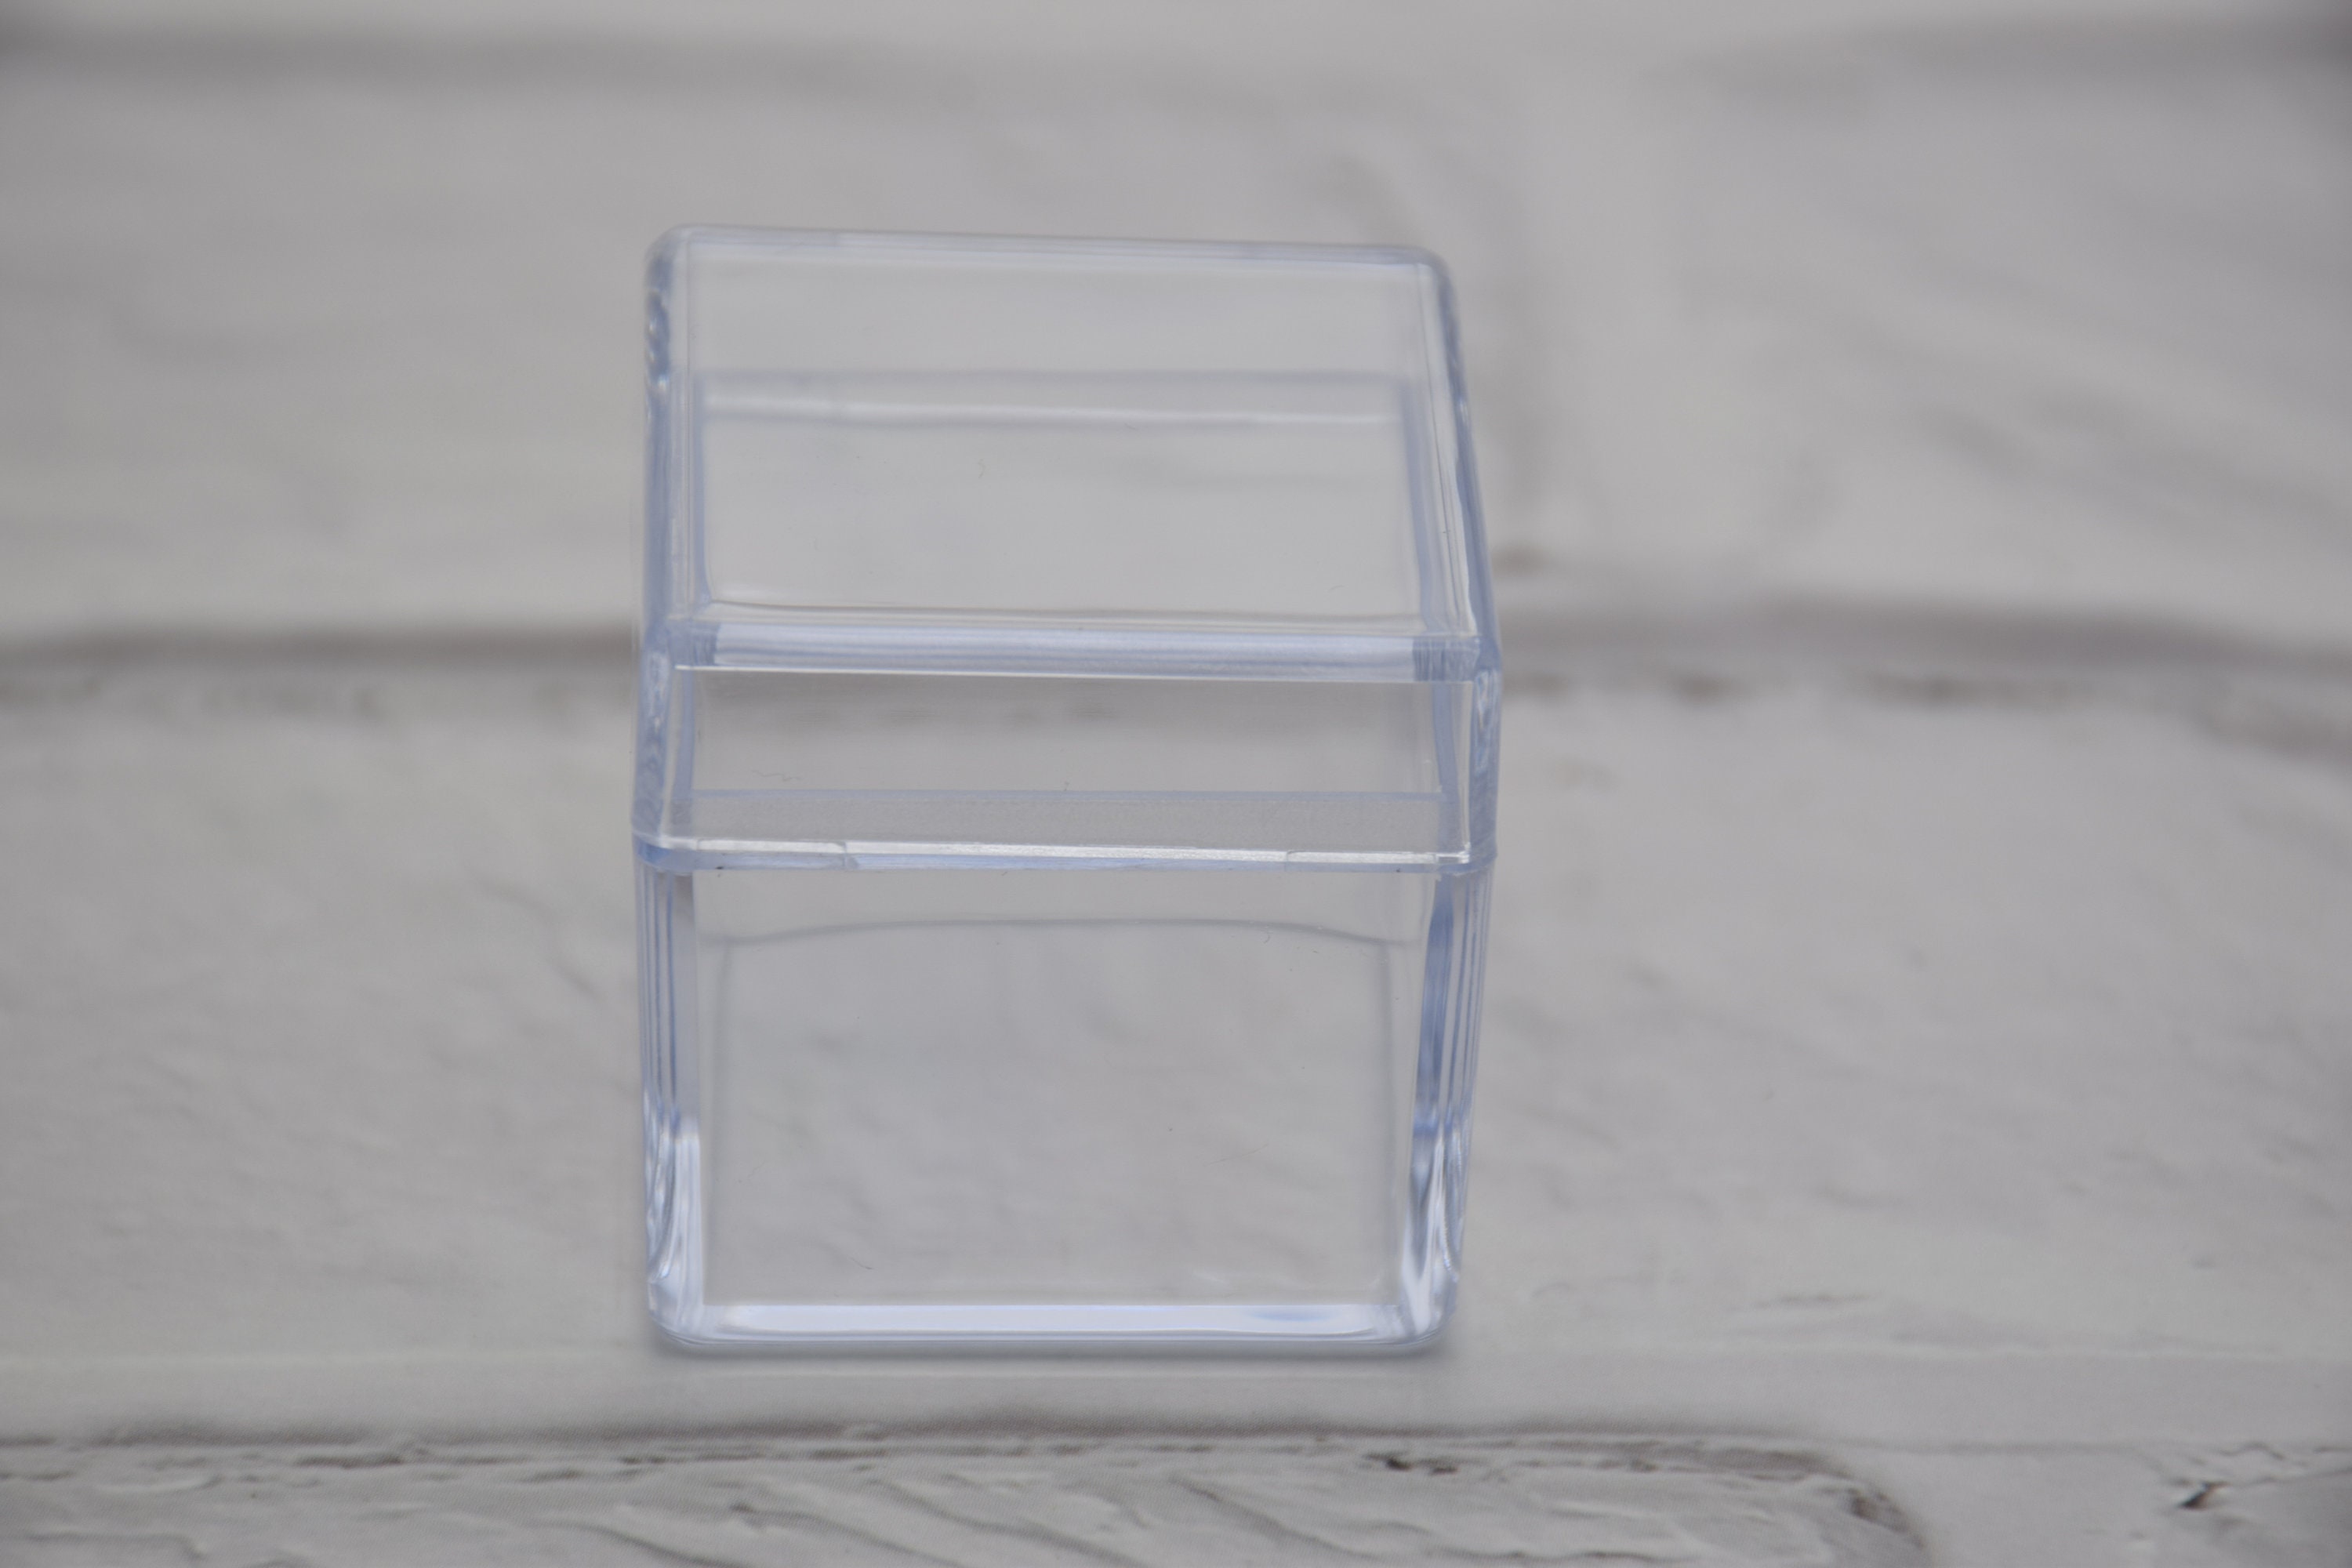 Square Plastic Box, Clear Square Box, Jewelry Beads Storage Box